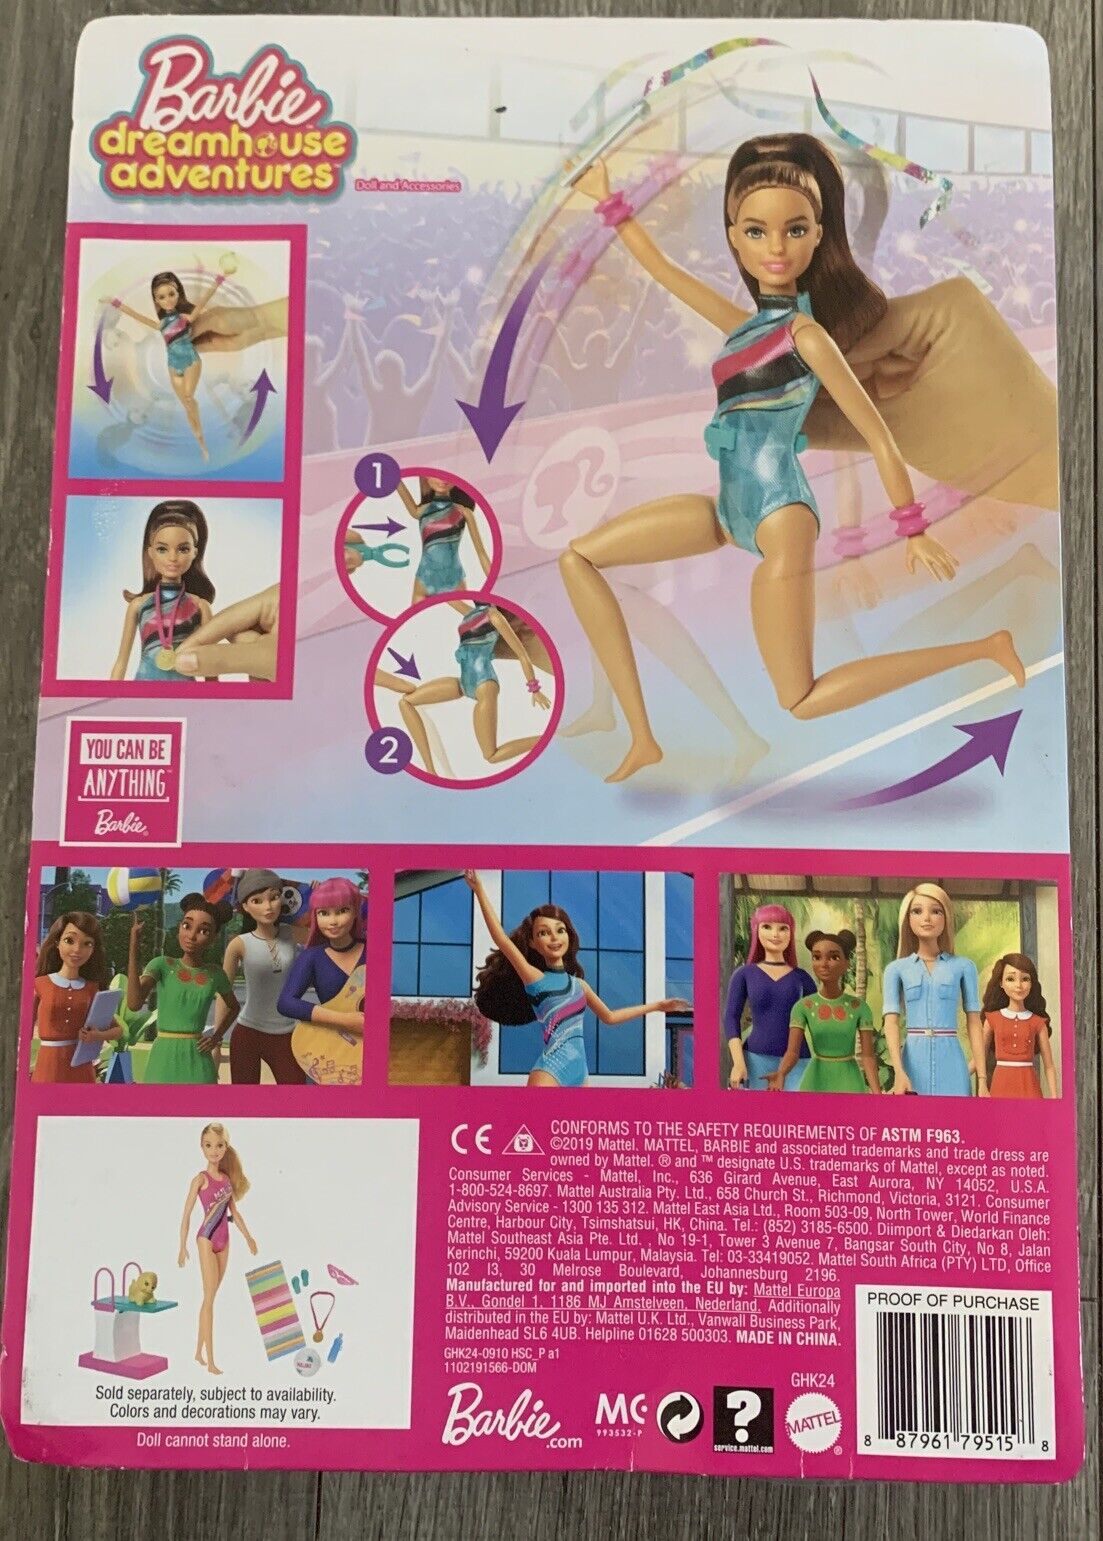 Barbie Dreamhouse Adventures Teresa Spin 'n Twirl Gymnast Doll & Pet Playset New Mattel GHK24 - фотография #5